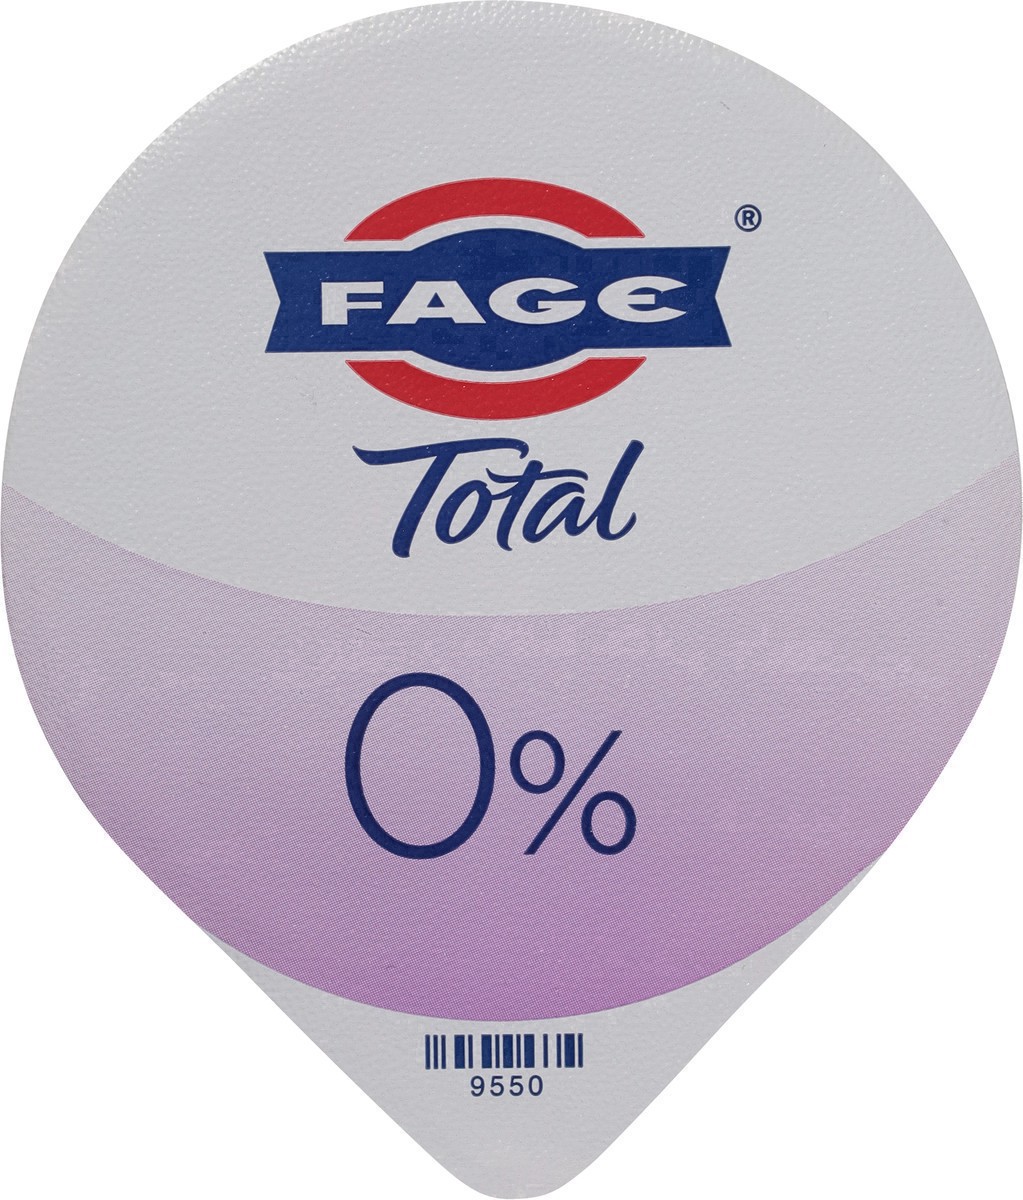 slide 2 of 25, Fage Total Greek Total 0% Greek Yogurt, 5.3 fl oz